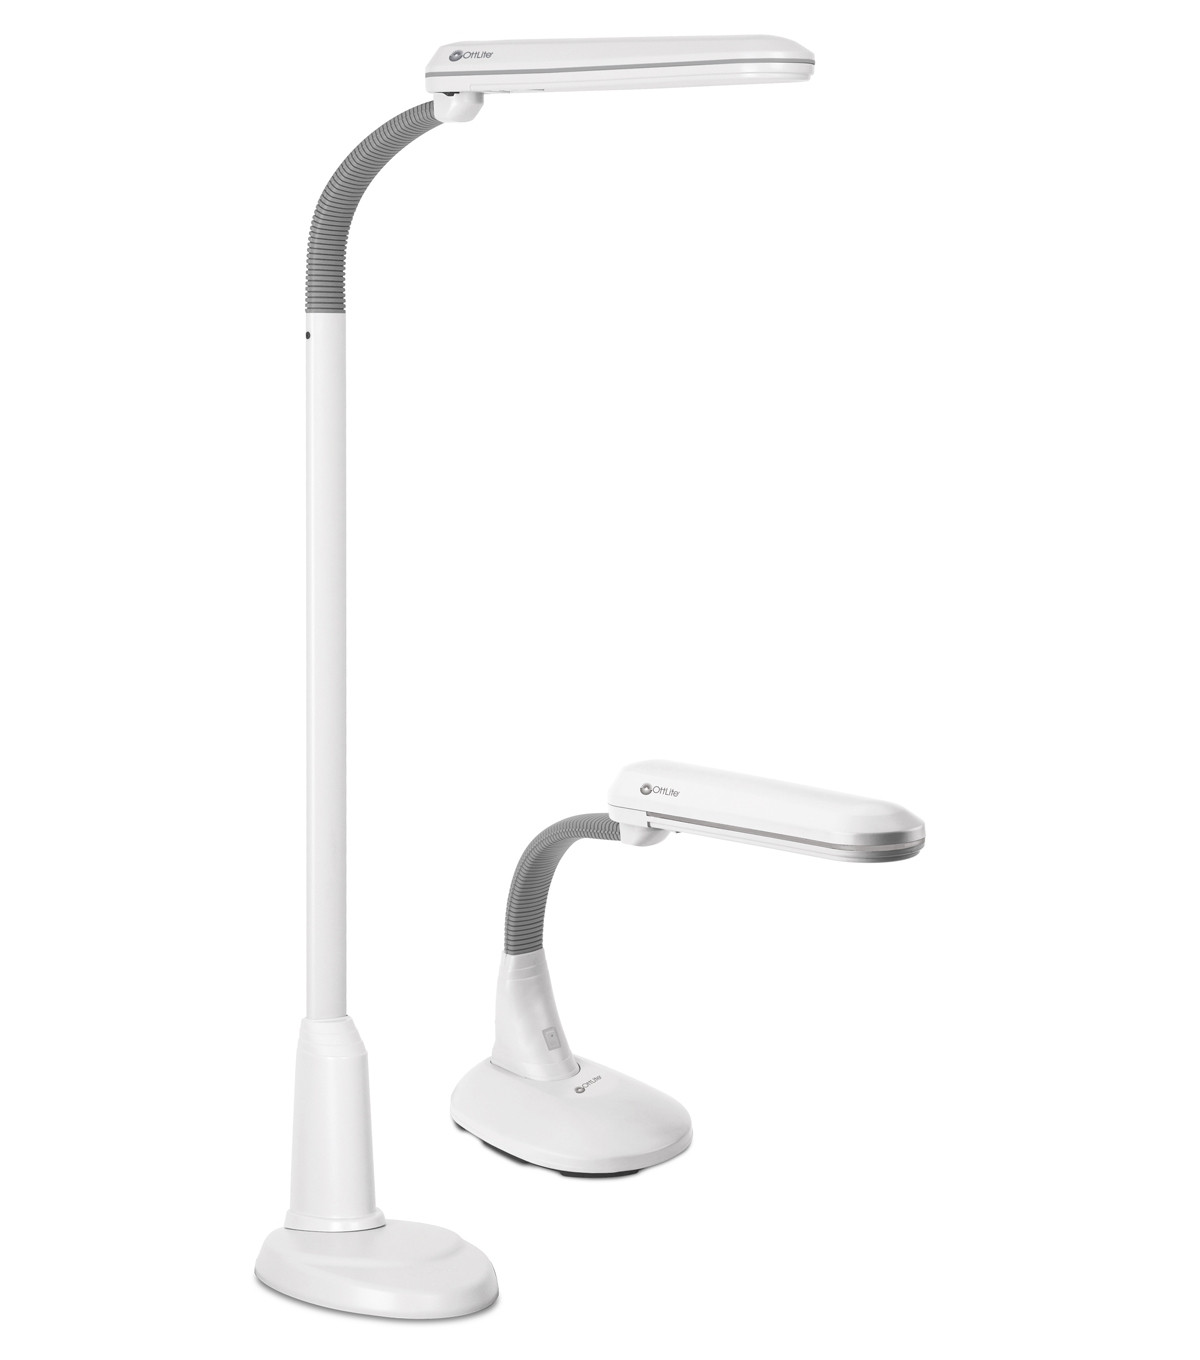 Best ideas about Costco Desk Lamp
. Save or Pin Decoration Nautical Desk Lamp Ott Light Costco Ottlite Led Now.